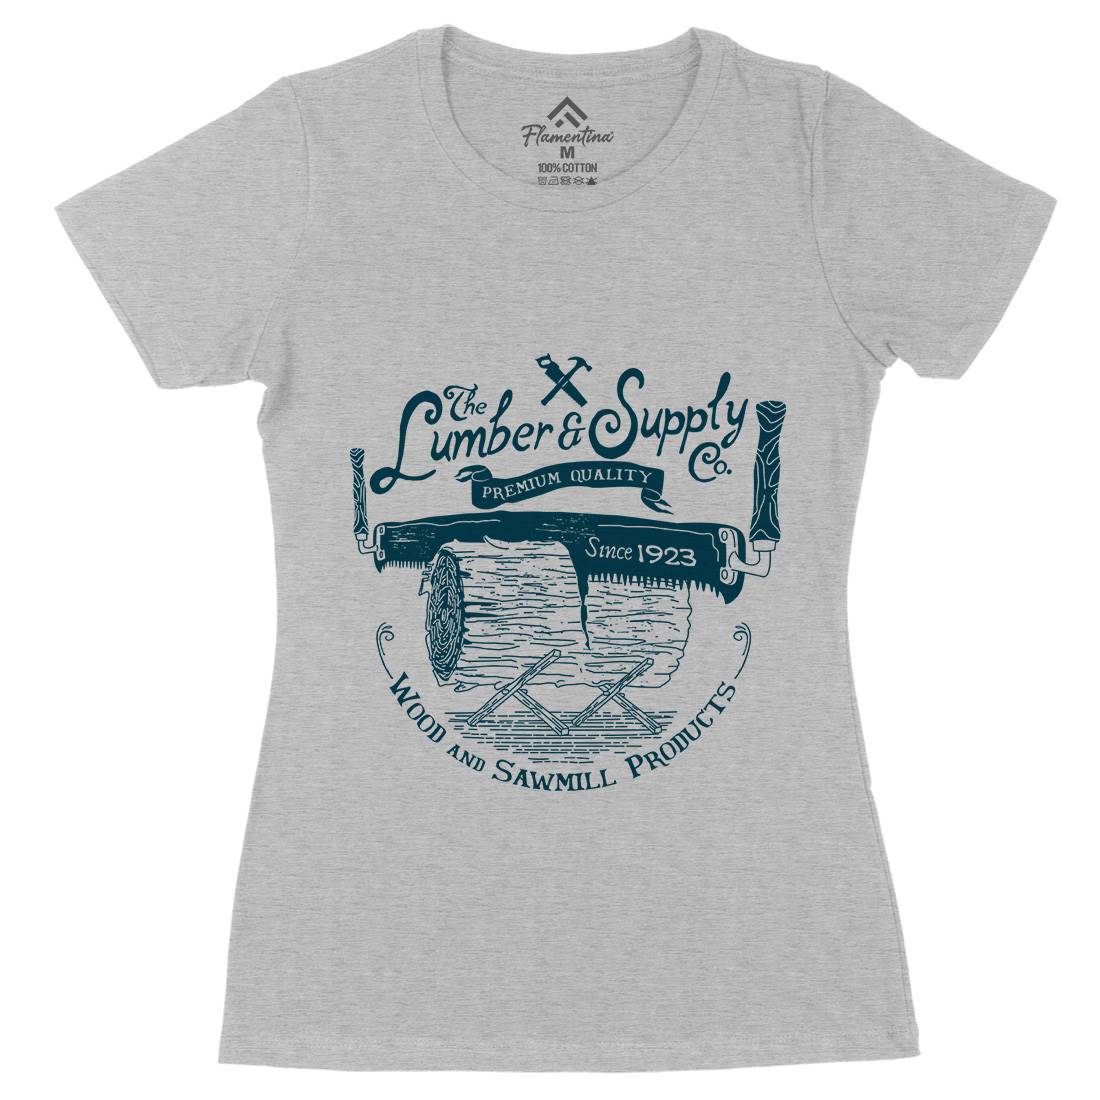 Lumber And Supply Womens Organic Crew Neck T-Shirt Work A975